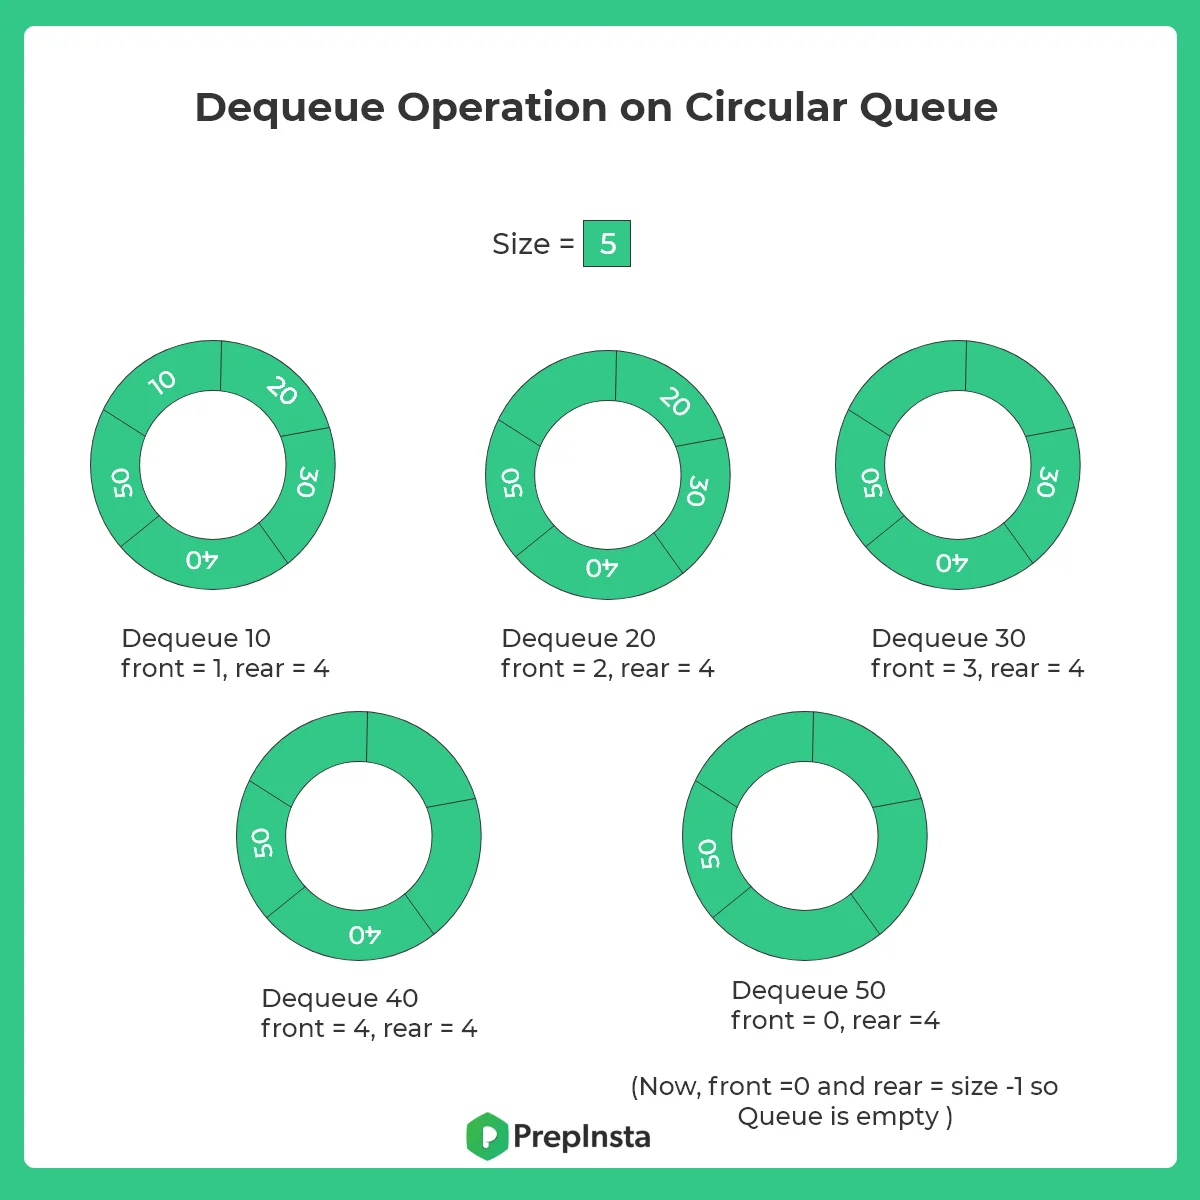 dequeue operation on a circular queue